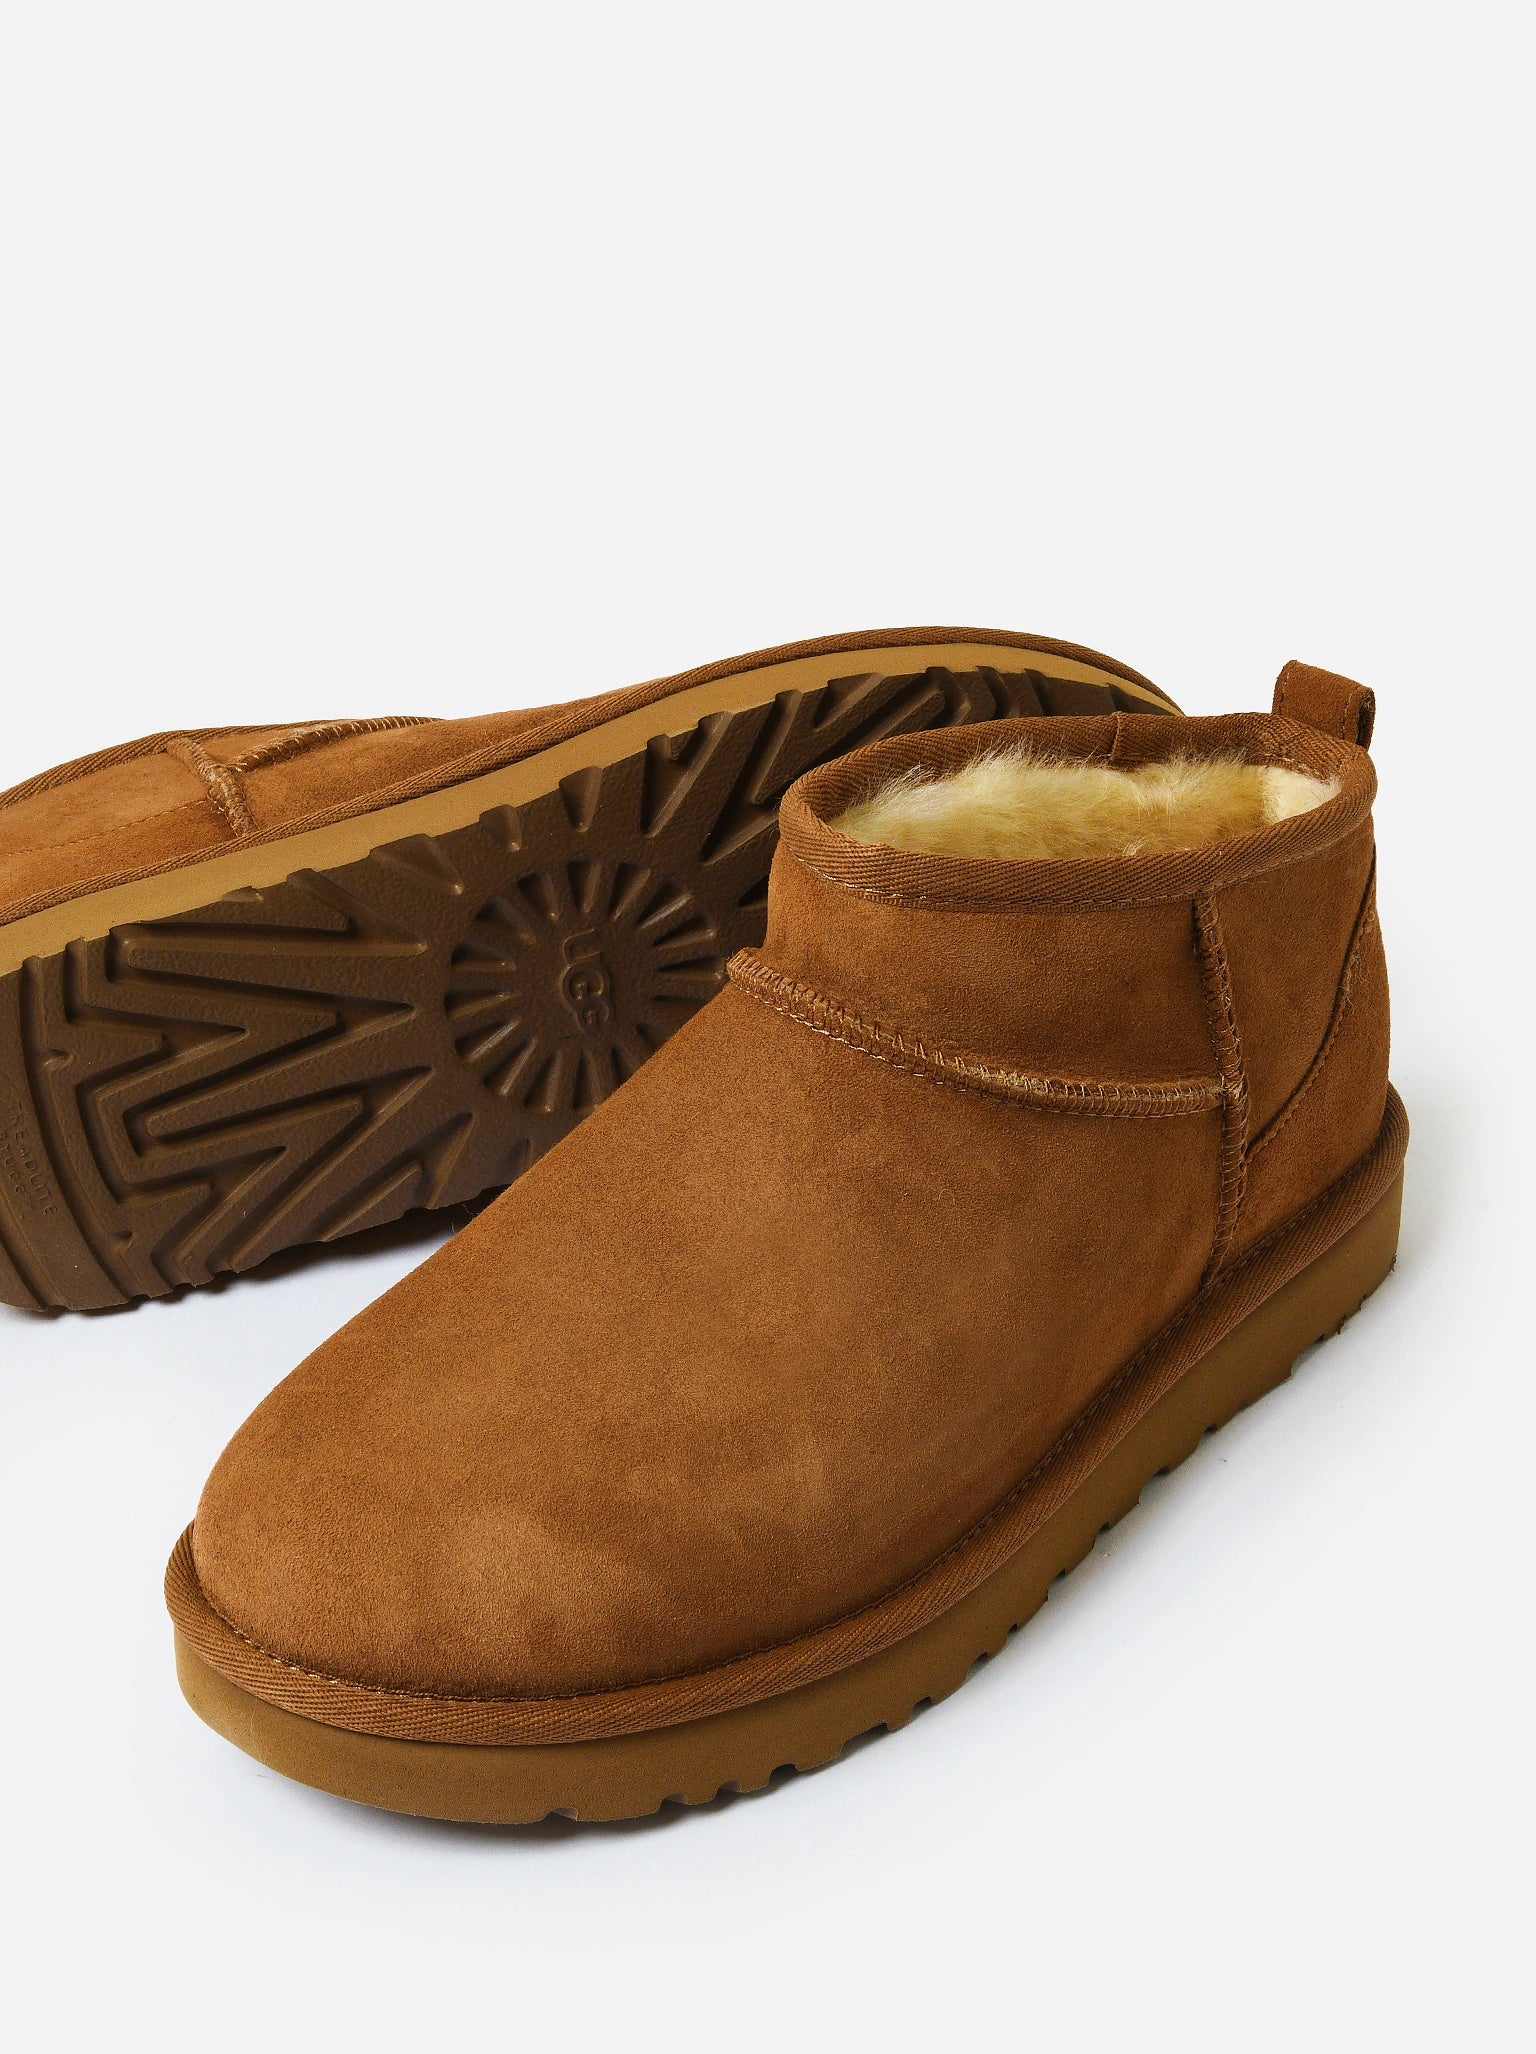 UGG Black Classic Ultra Mini Leather Boots, Size: 3